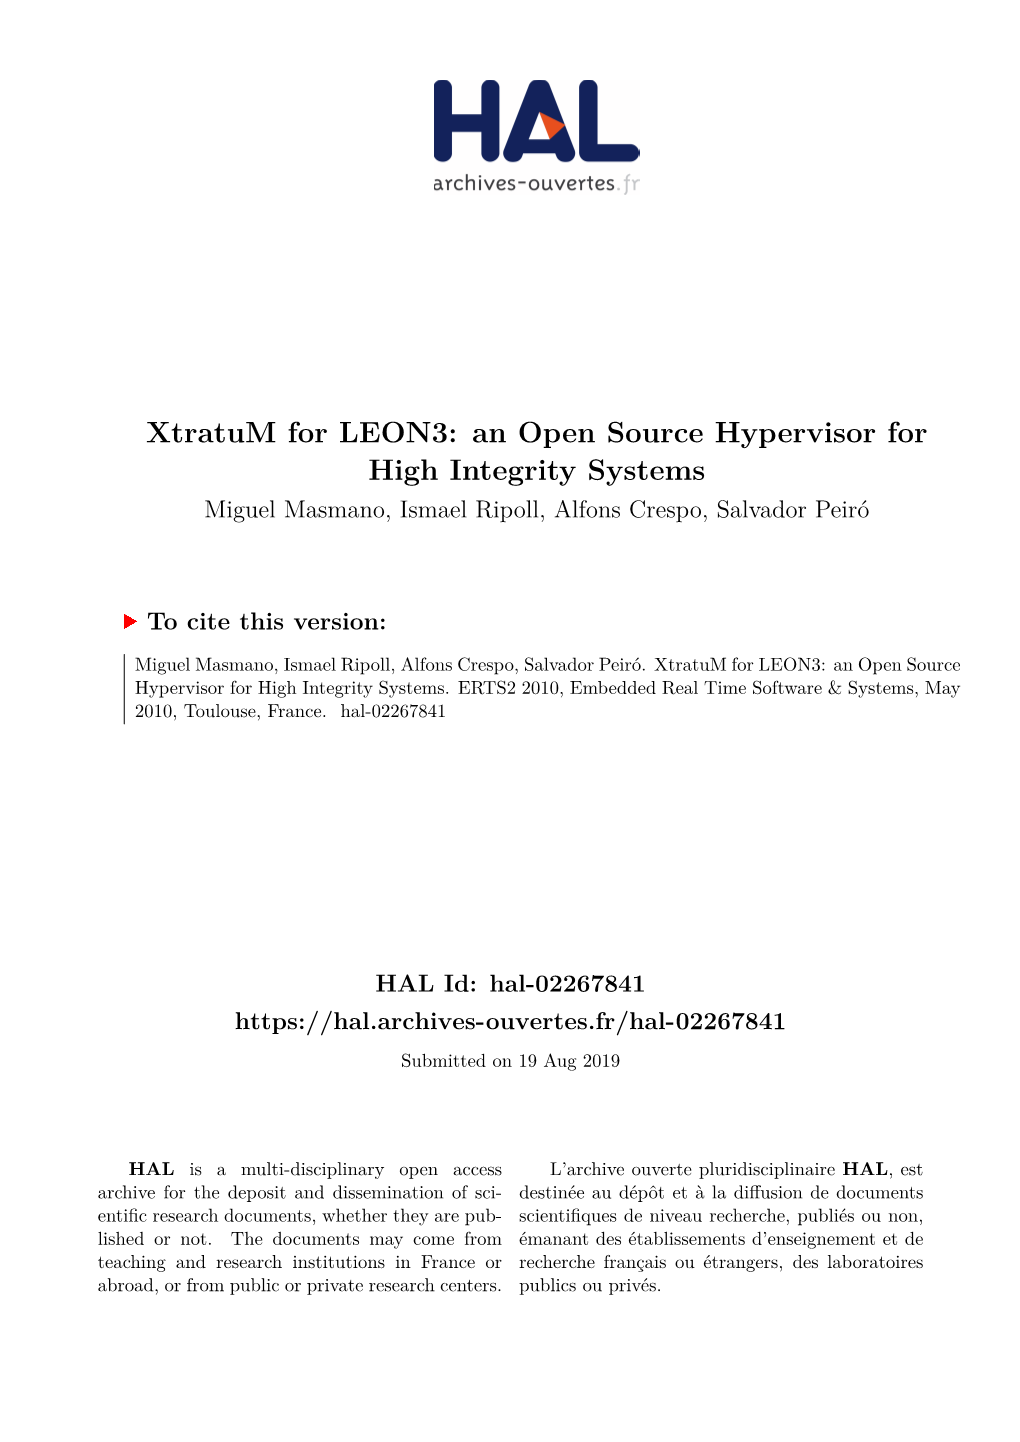 Xtratum for LEON3: an Open Source Hypervisor for High Integrity Systems Miguel Masmano, Ismael Ripoll, Alfons Crespo, Salvador Peiró